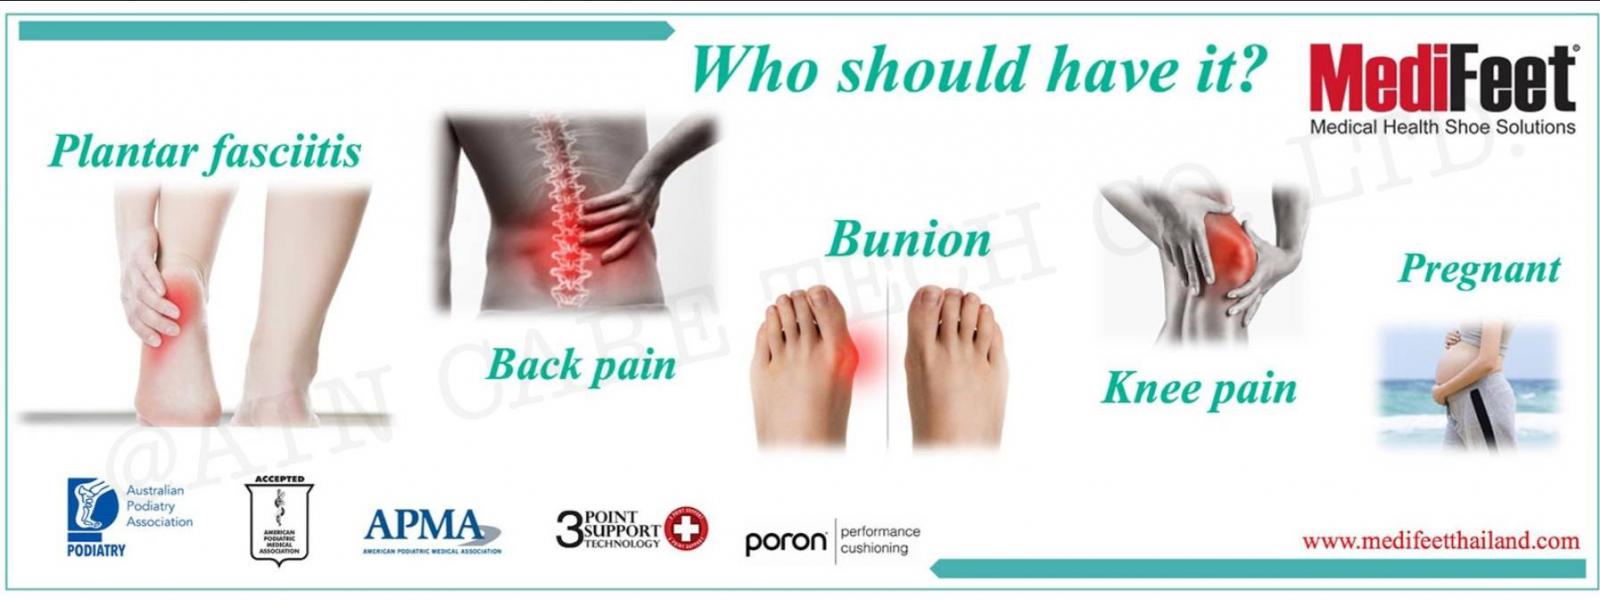 Plantar Fasciitis Back Pain Bunion Knee Pain Pregnant